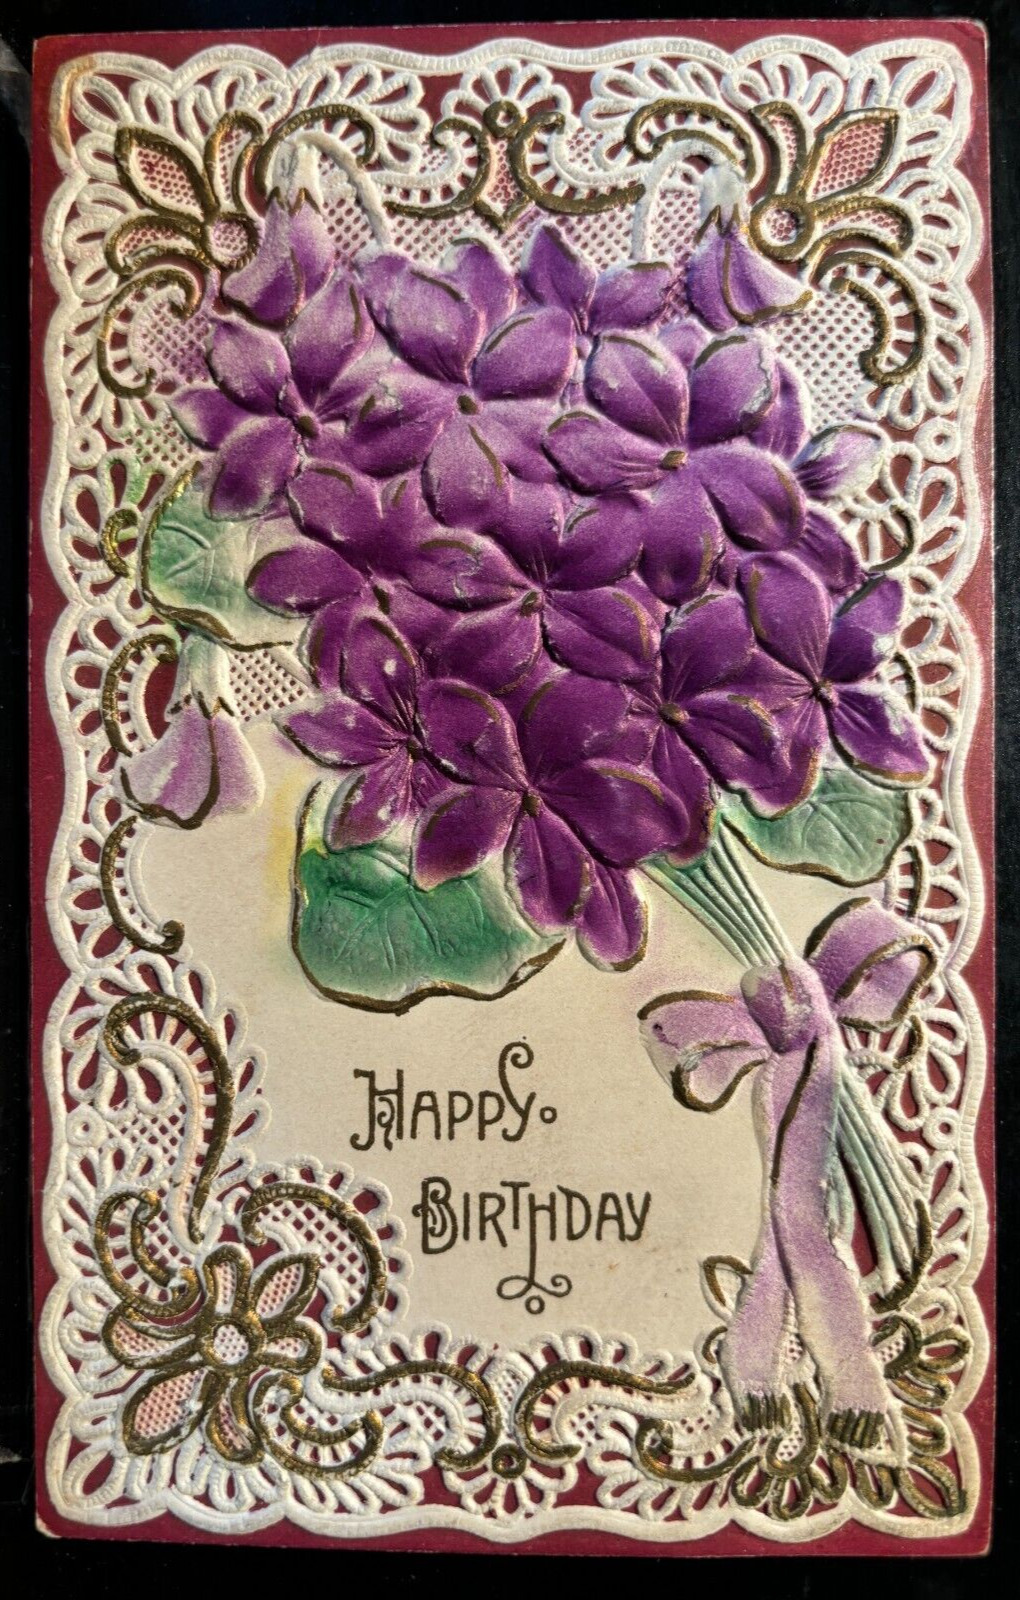 Vintage Victorian Postcard 1910 Happy Birthday - Amazing Embellished Border